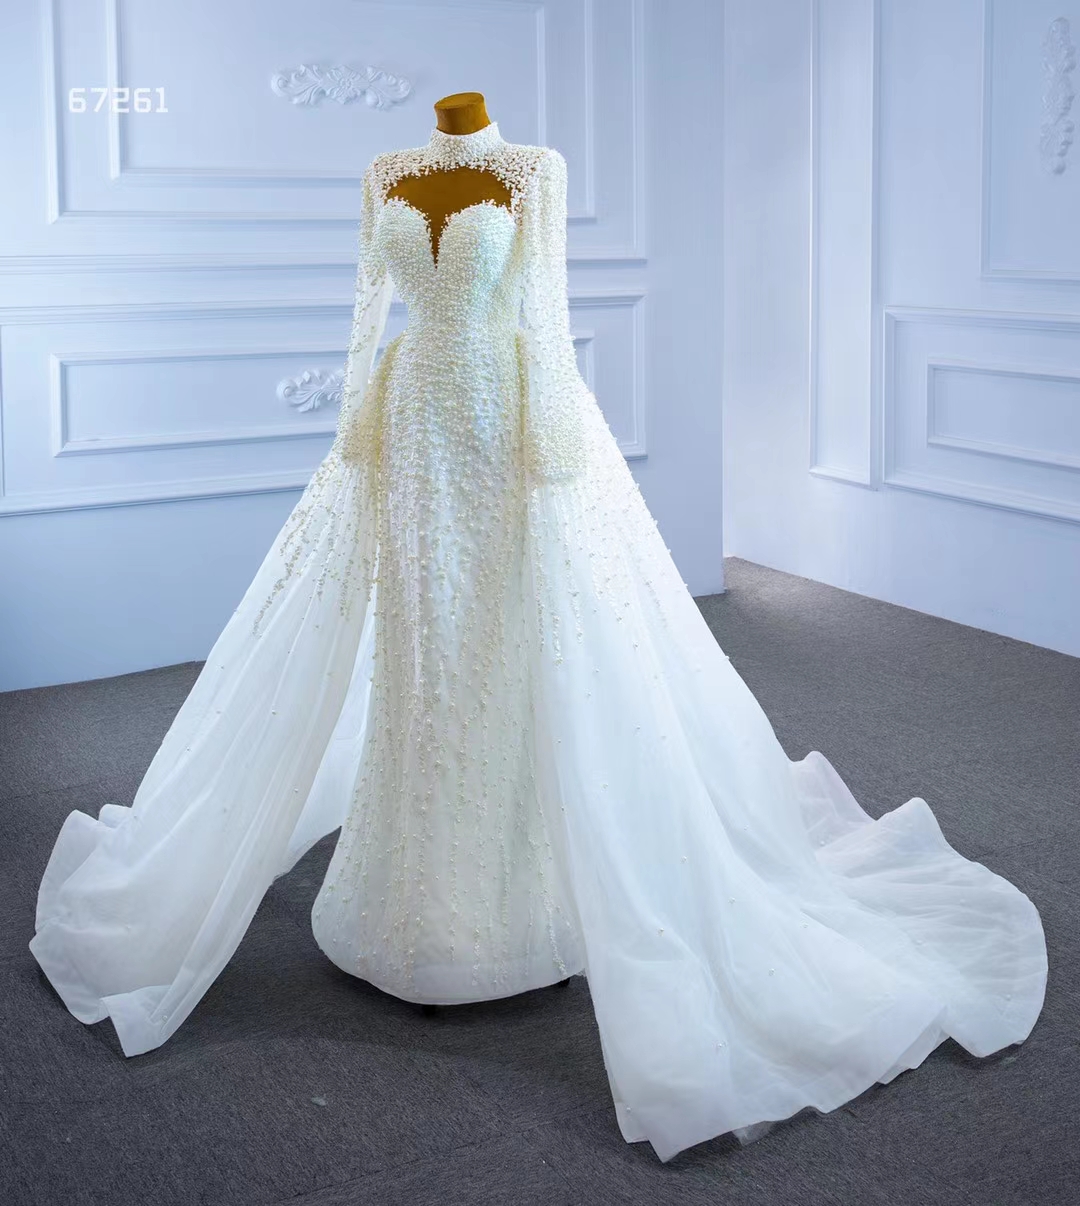 Mermaid Train Wedding Dress Luxury White High Neck Long Sleeve SM67261